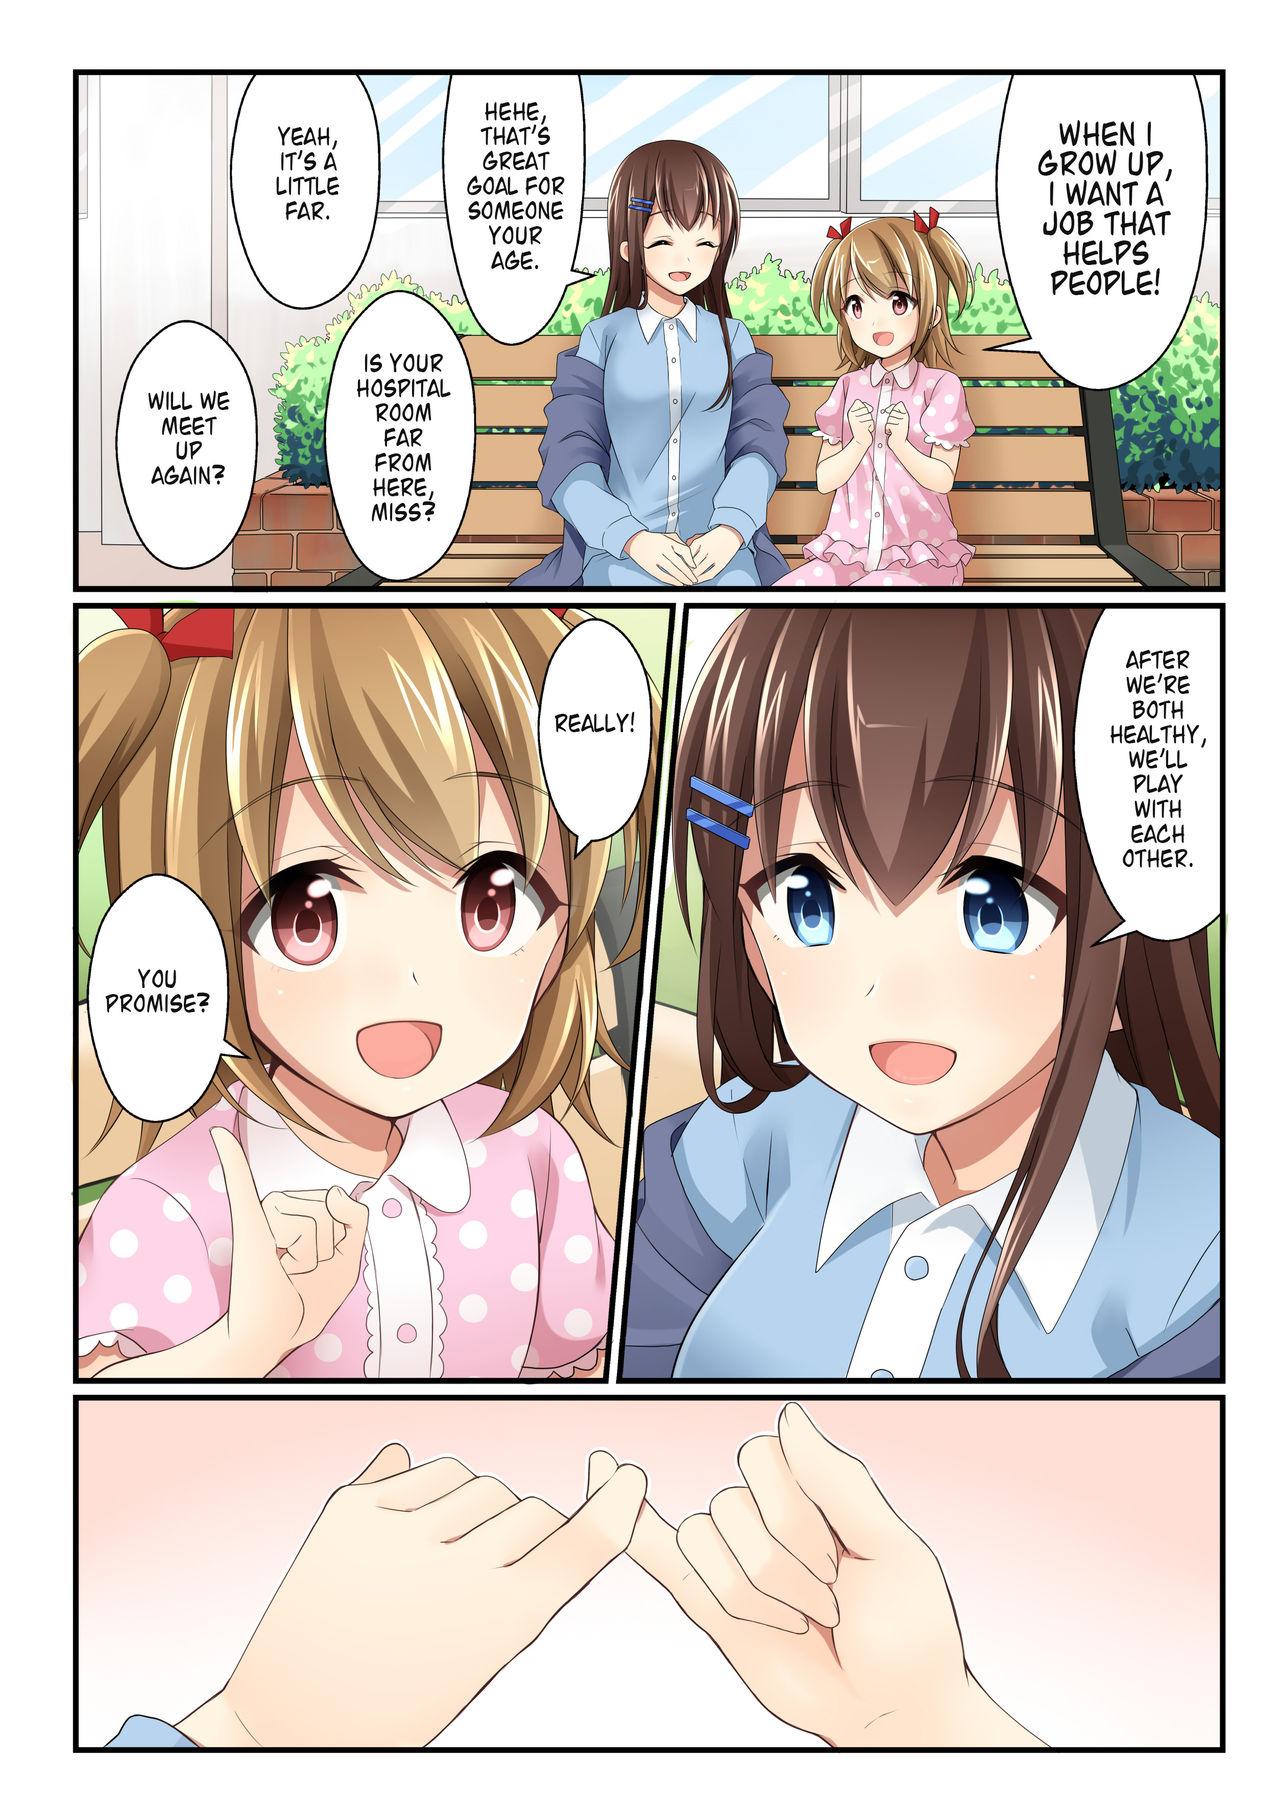 Strange [Shinenkan] Joutaihenka Manga vol. 2 ~Onnanoko no Asoko wa dou natterun no? Hen~ | Transformation Comics vol. 2 ~What's the Deal with Girl's Privates?~ [English] Masturbating - Picture 1